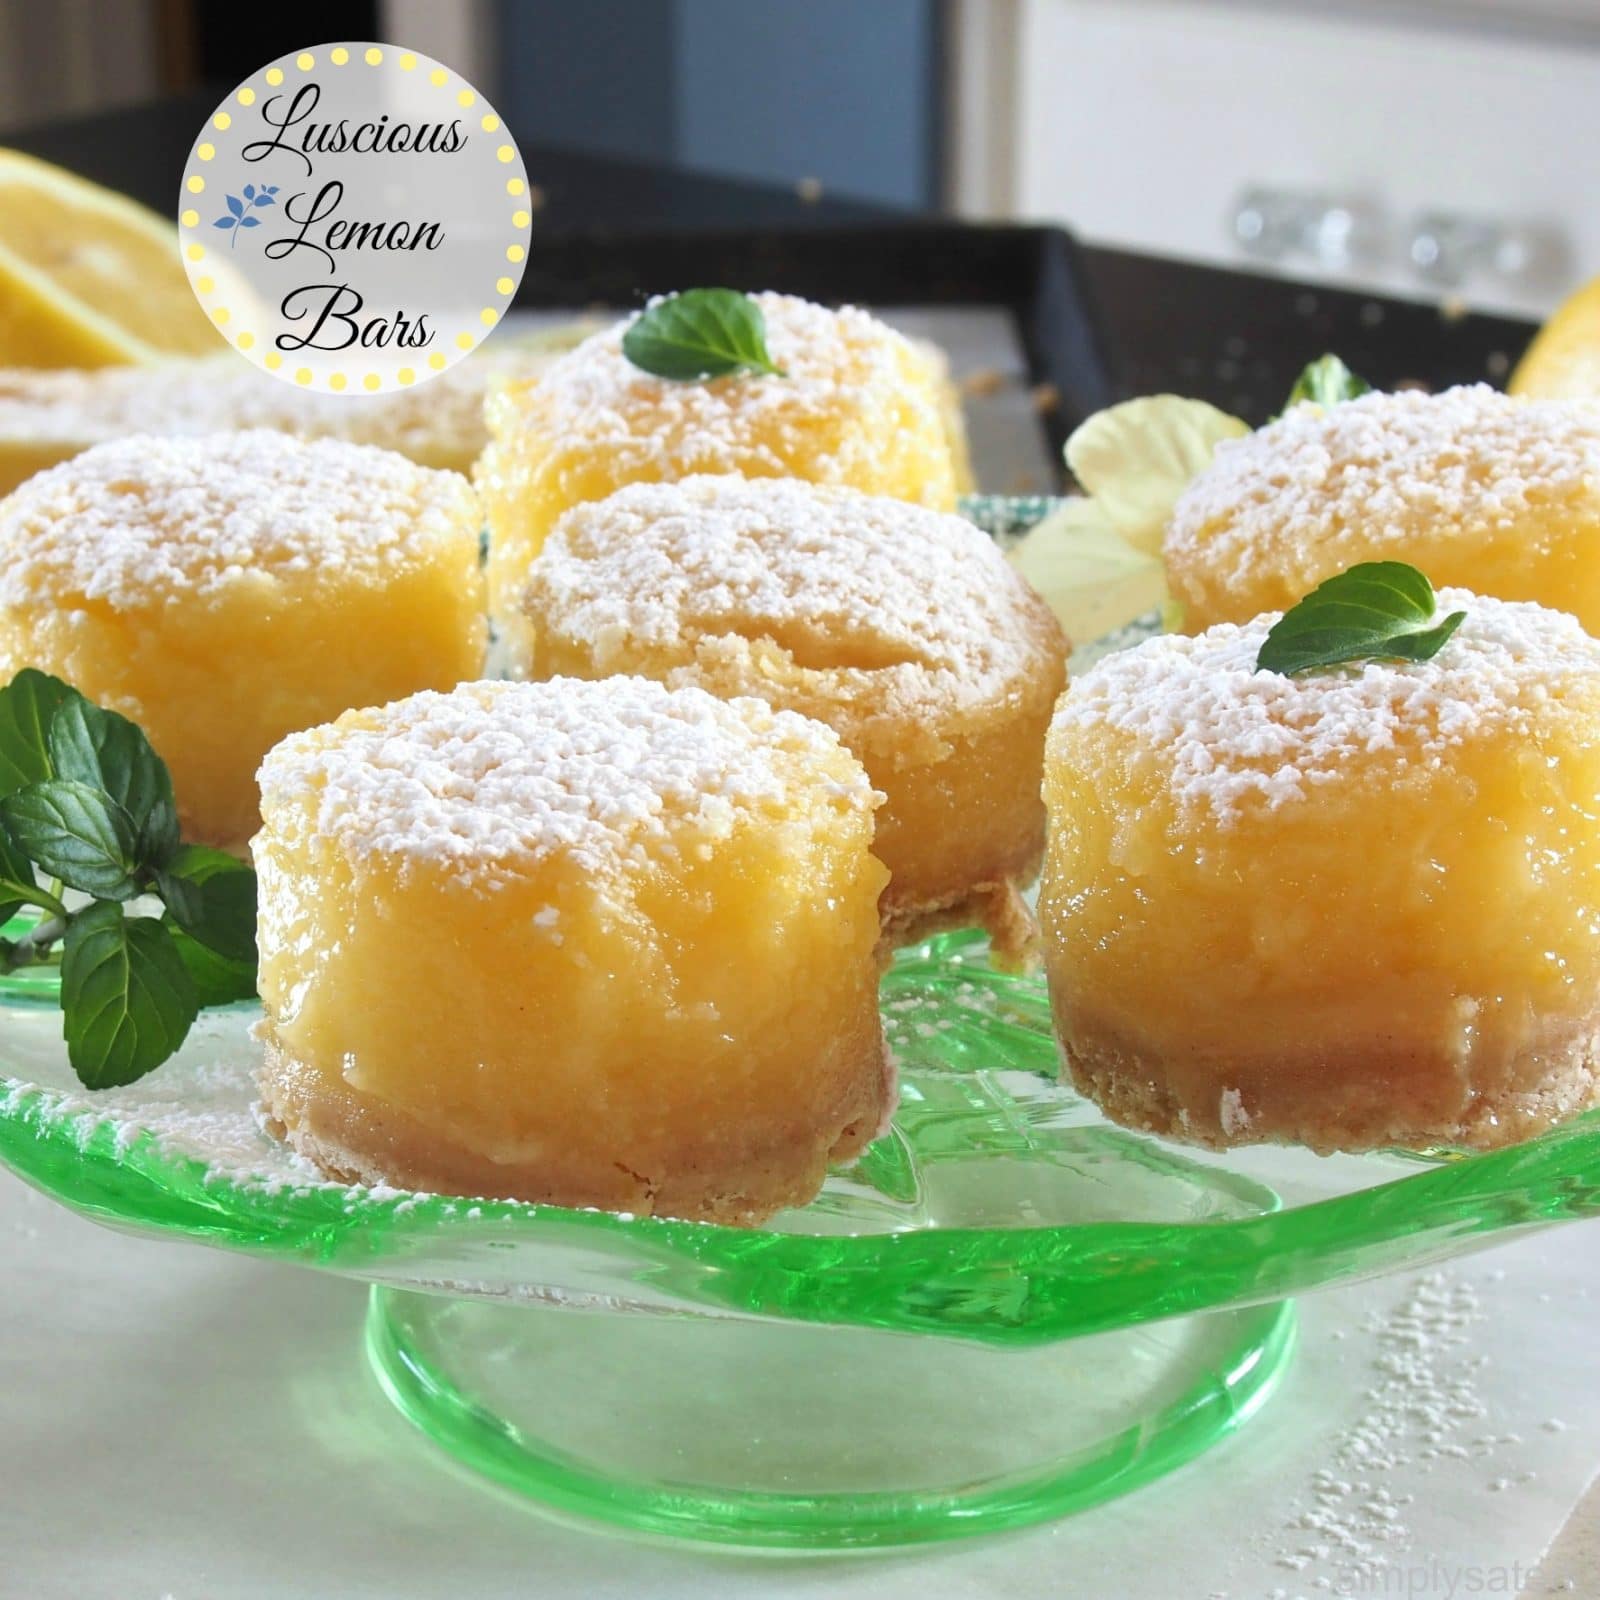 Luscious Lemon Bars - the perfect lemony sweet/tart custard on a shortbread crust. A great traditional dessert. www.simplysated.com